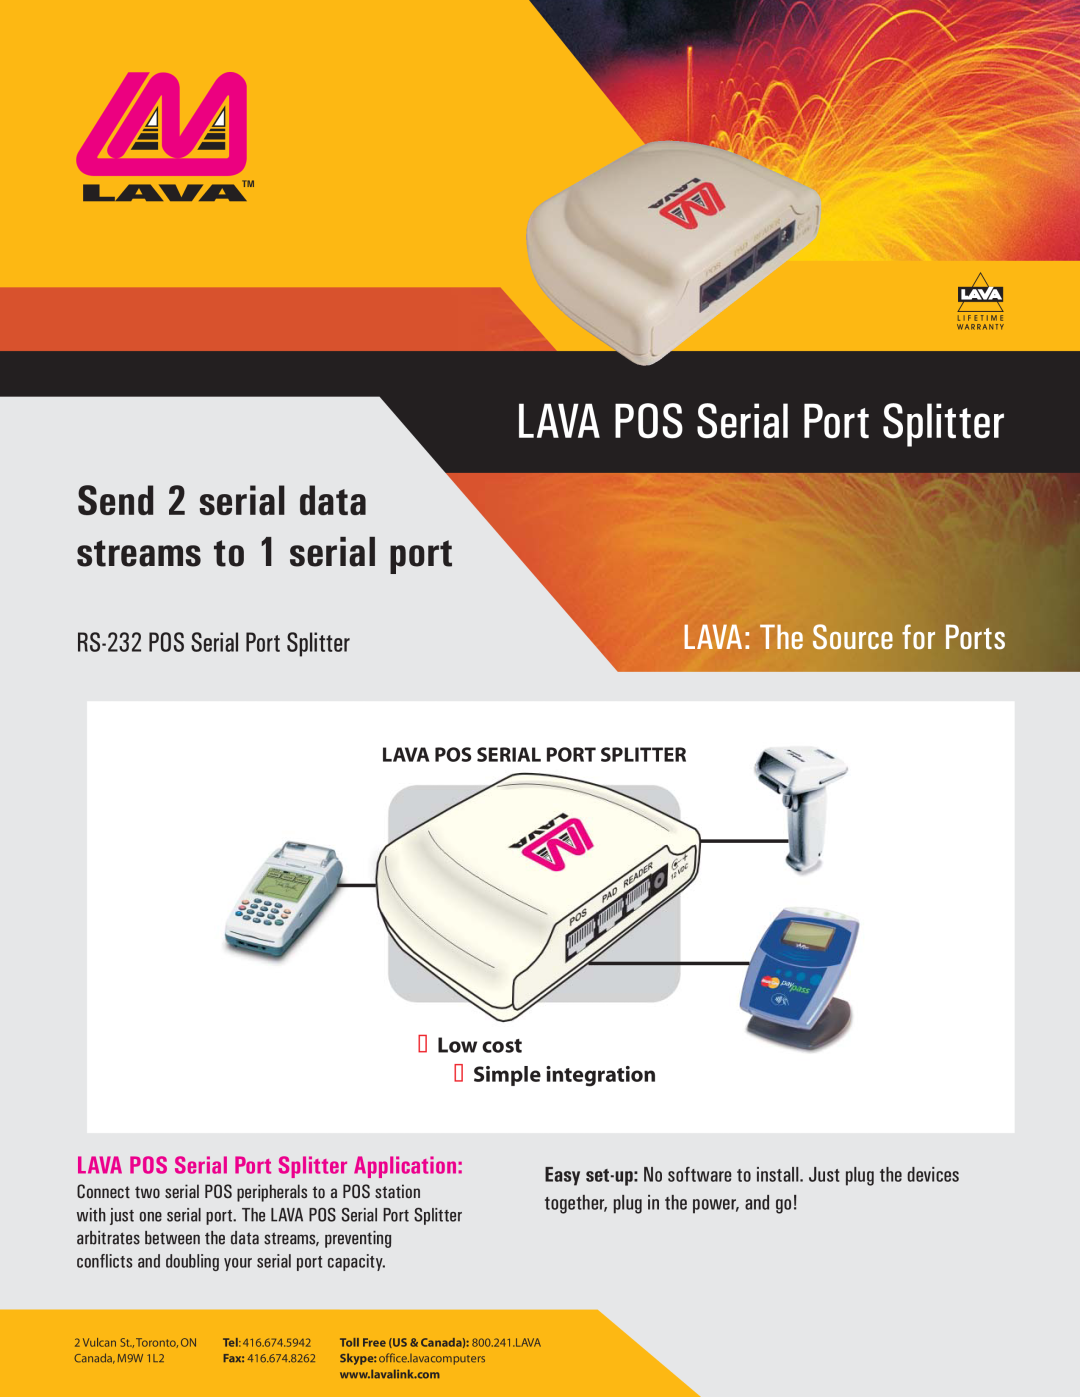 Lava Computer manual LAVA POS Serial Port Splitter, Send 2 serial data streams to 1 serial port, Vulcan St.,Toronto, ON 